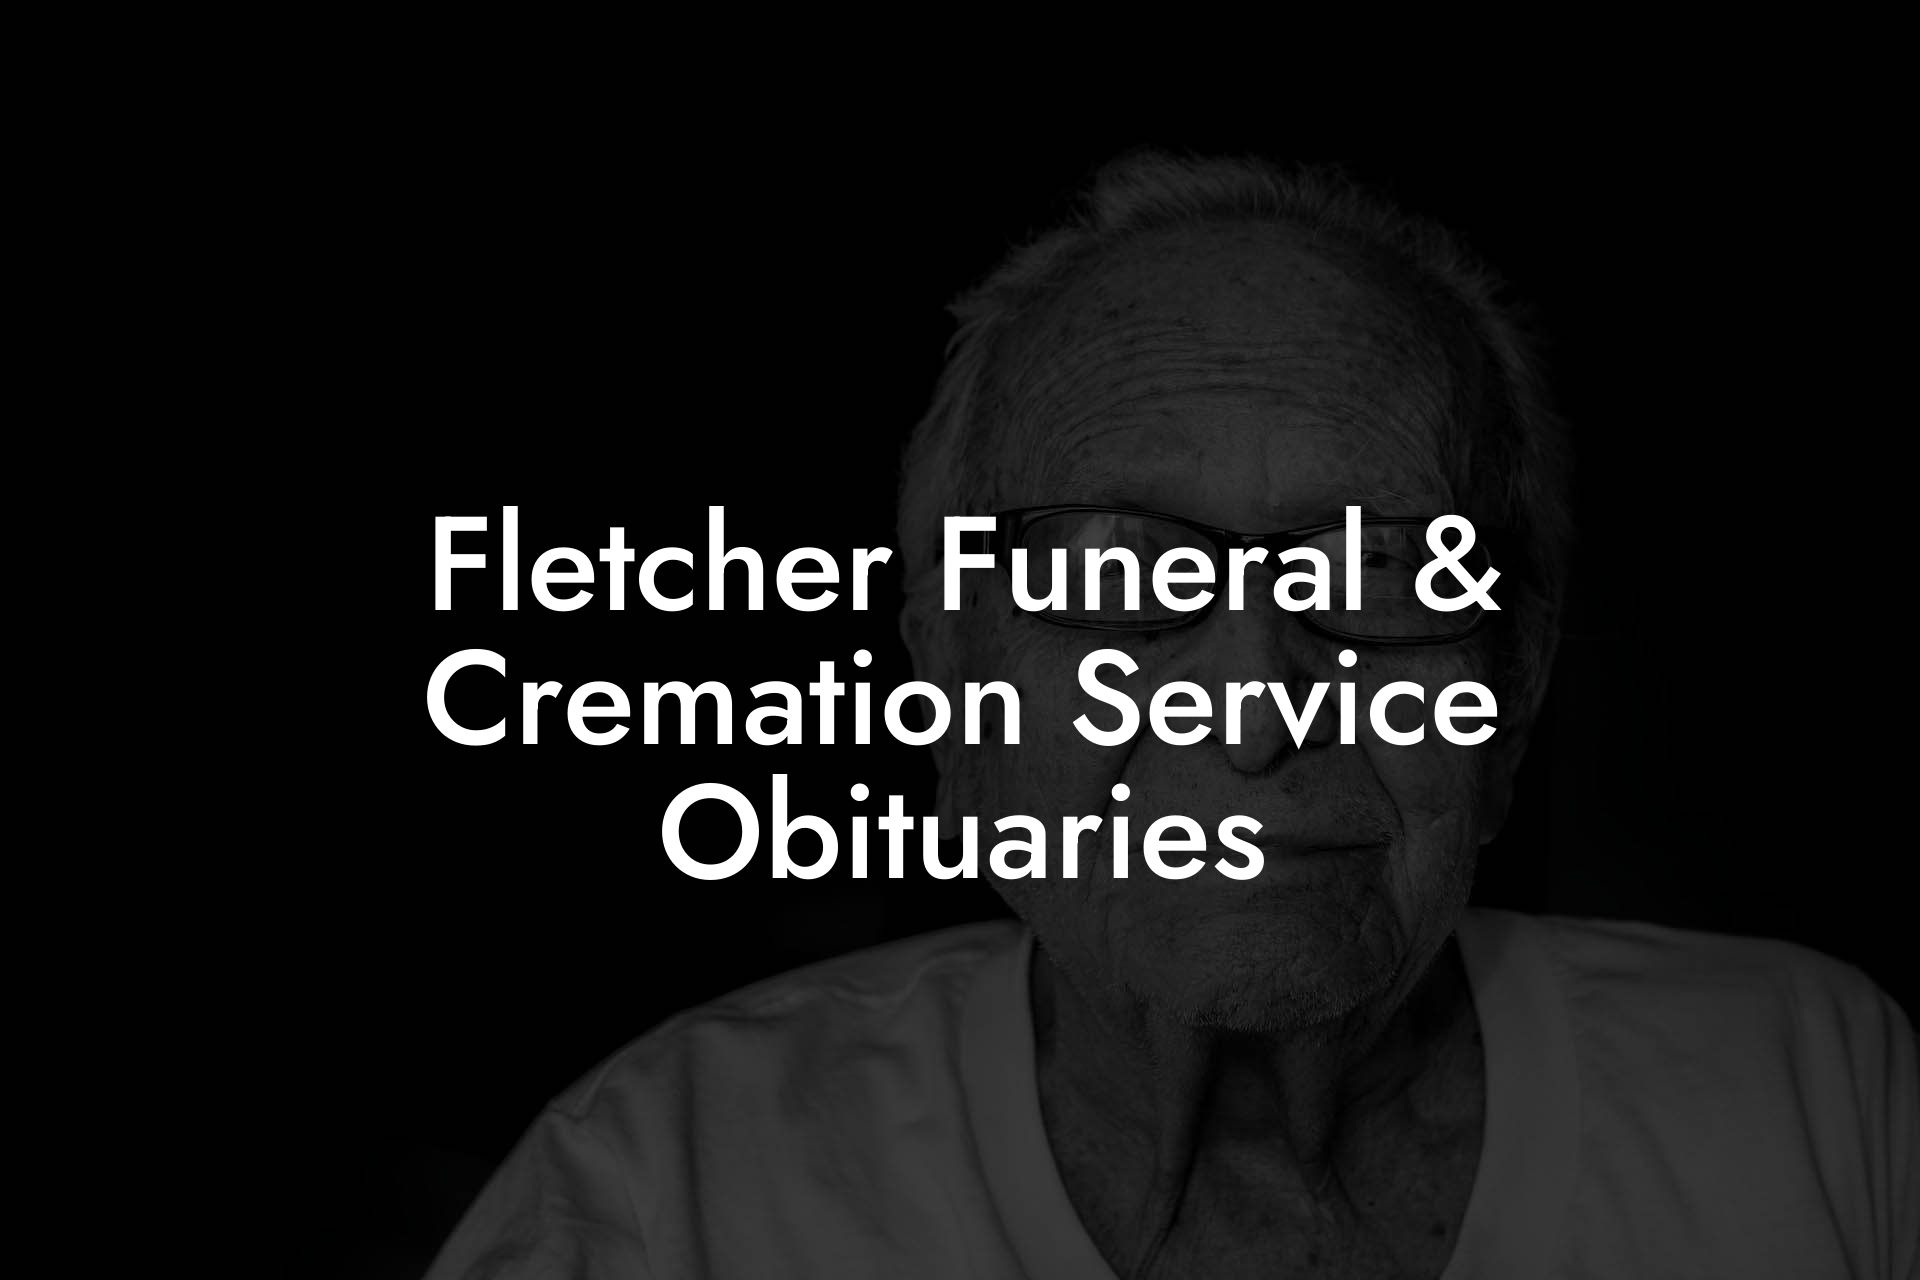 Fletcher Funeral & Cremation Service Obituaries